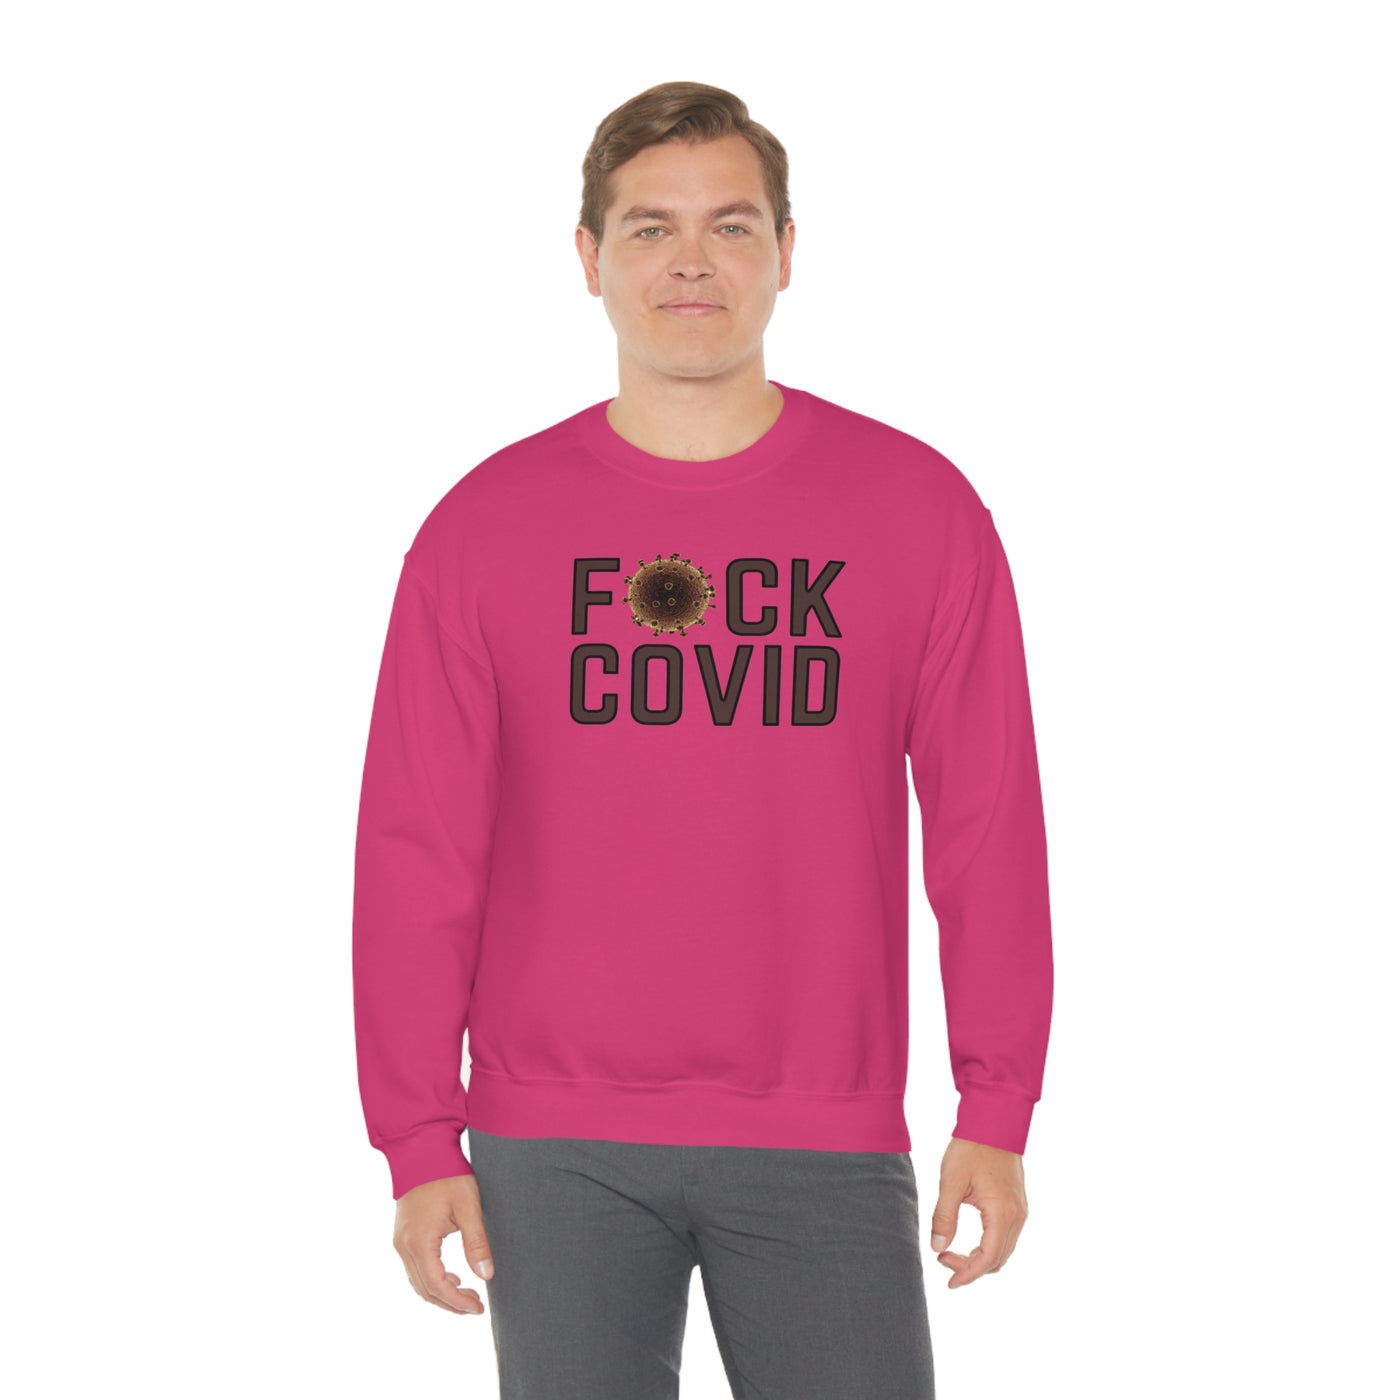 F*CK COVID Crewneck Sweatshirt